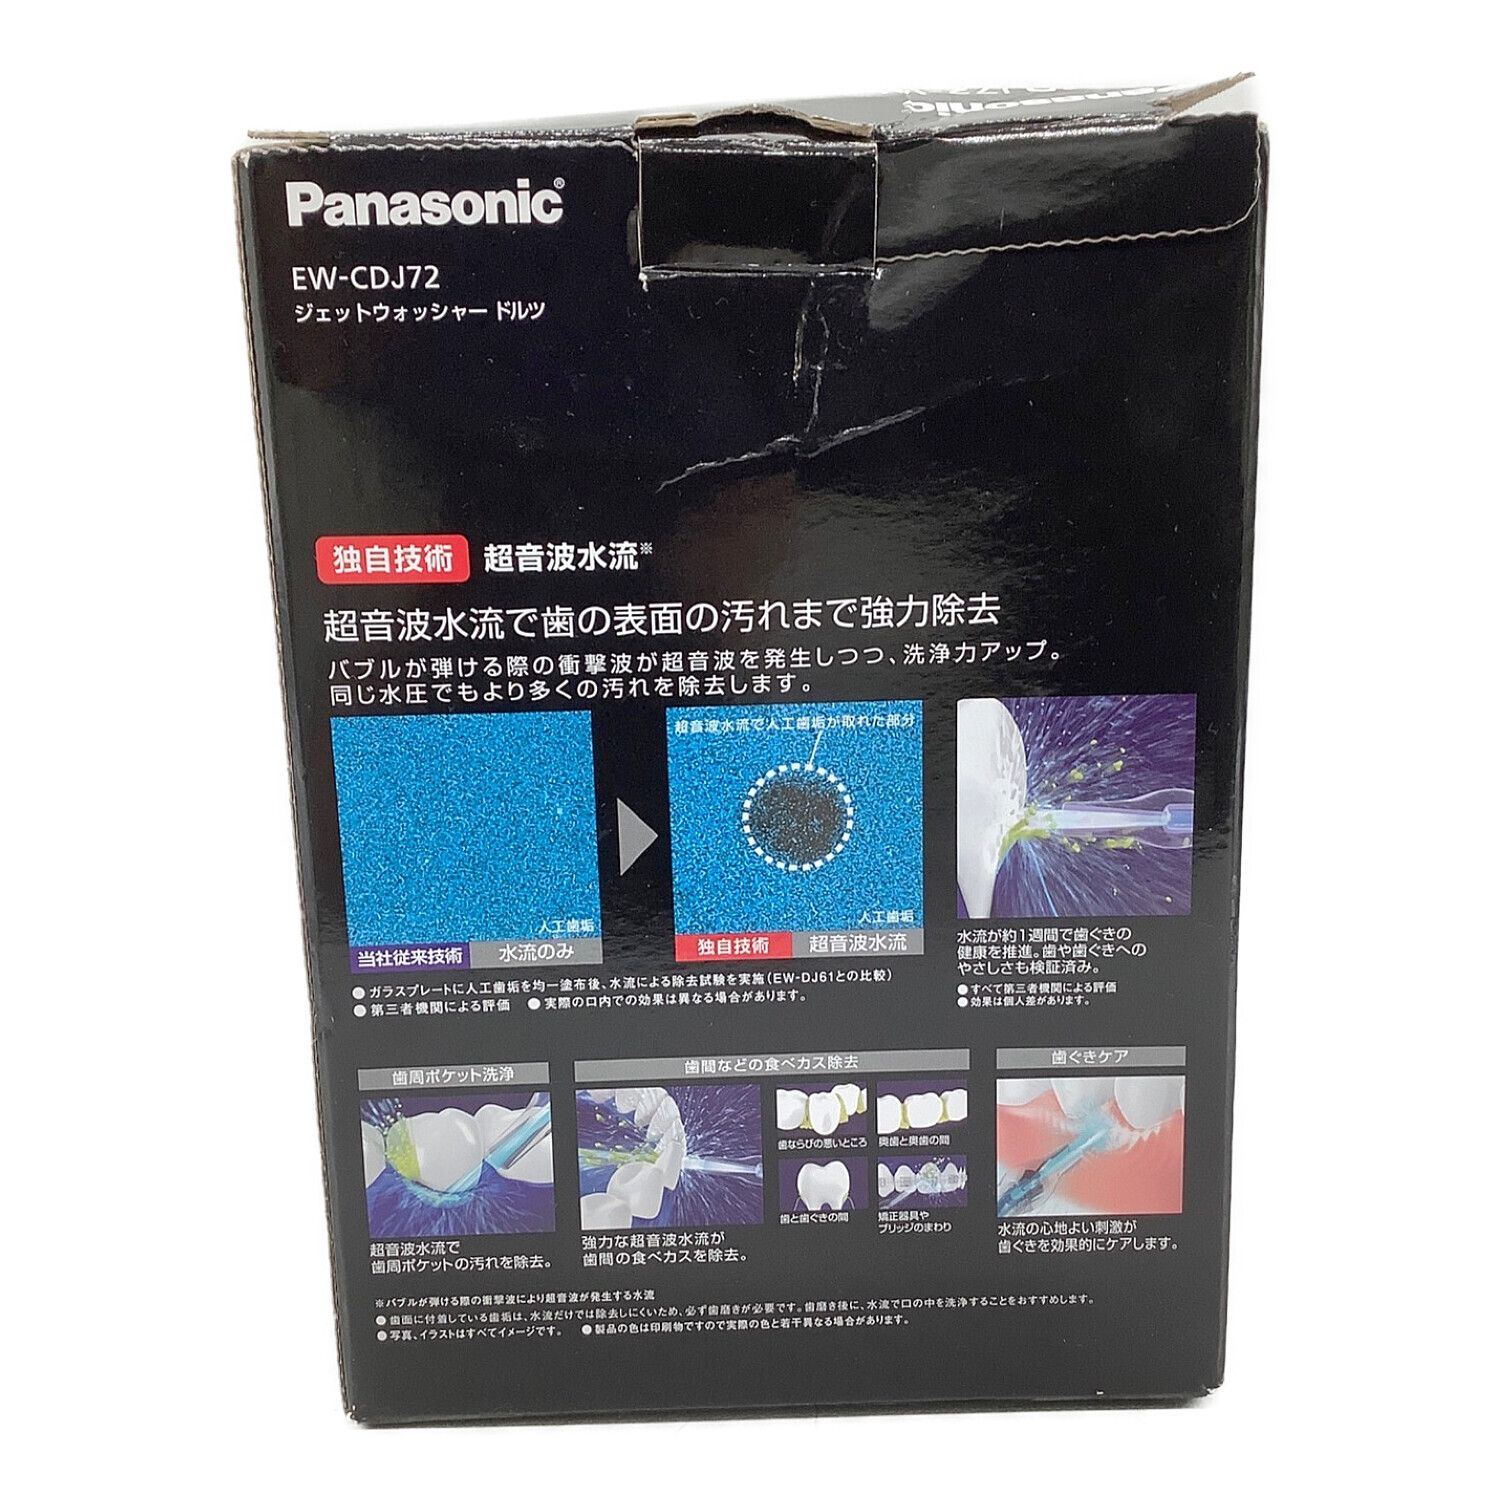 Panasonic (パナソニック) ジェッドウォッシャー EW-CDJ72-W 未使用品 